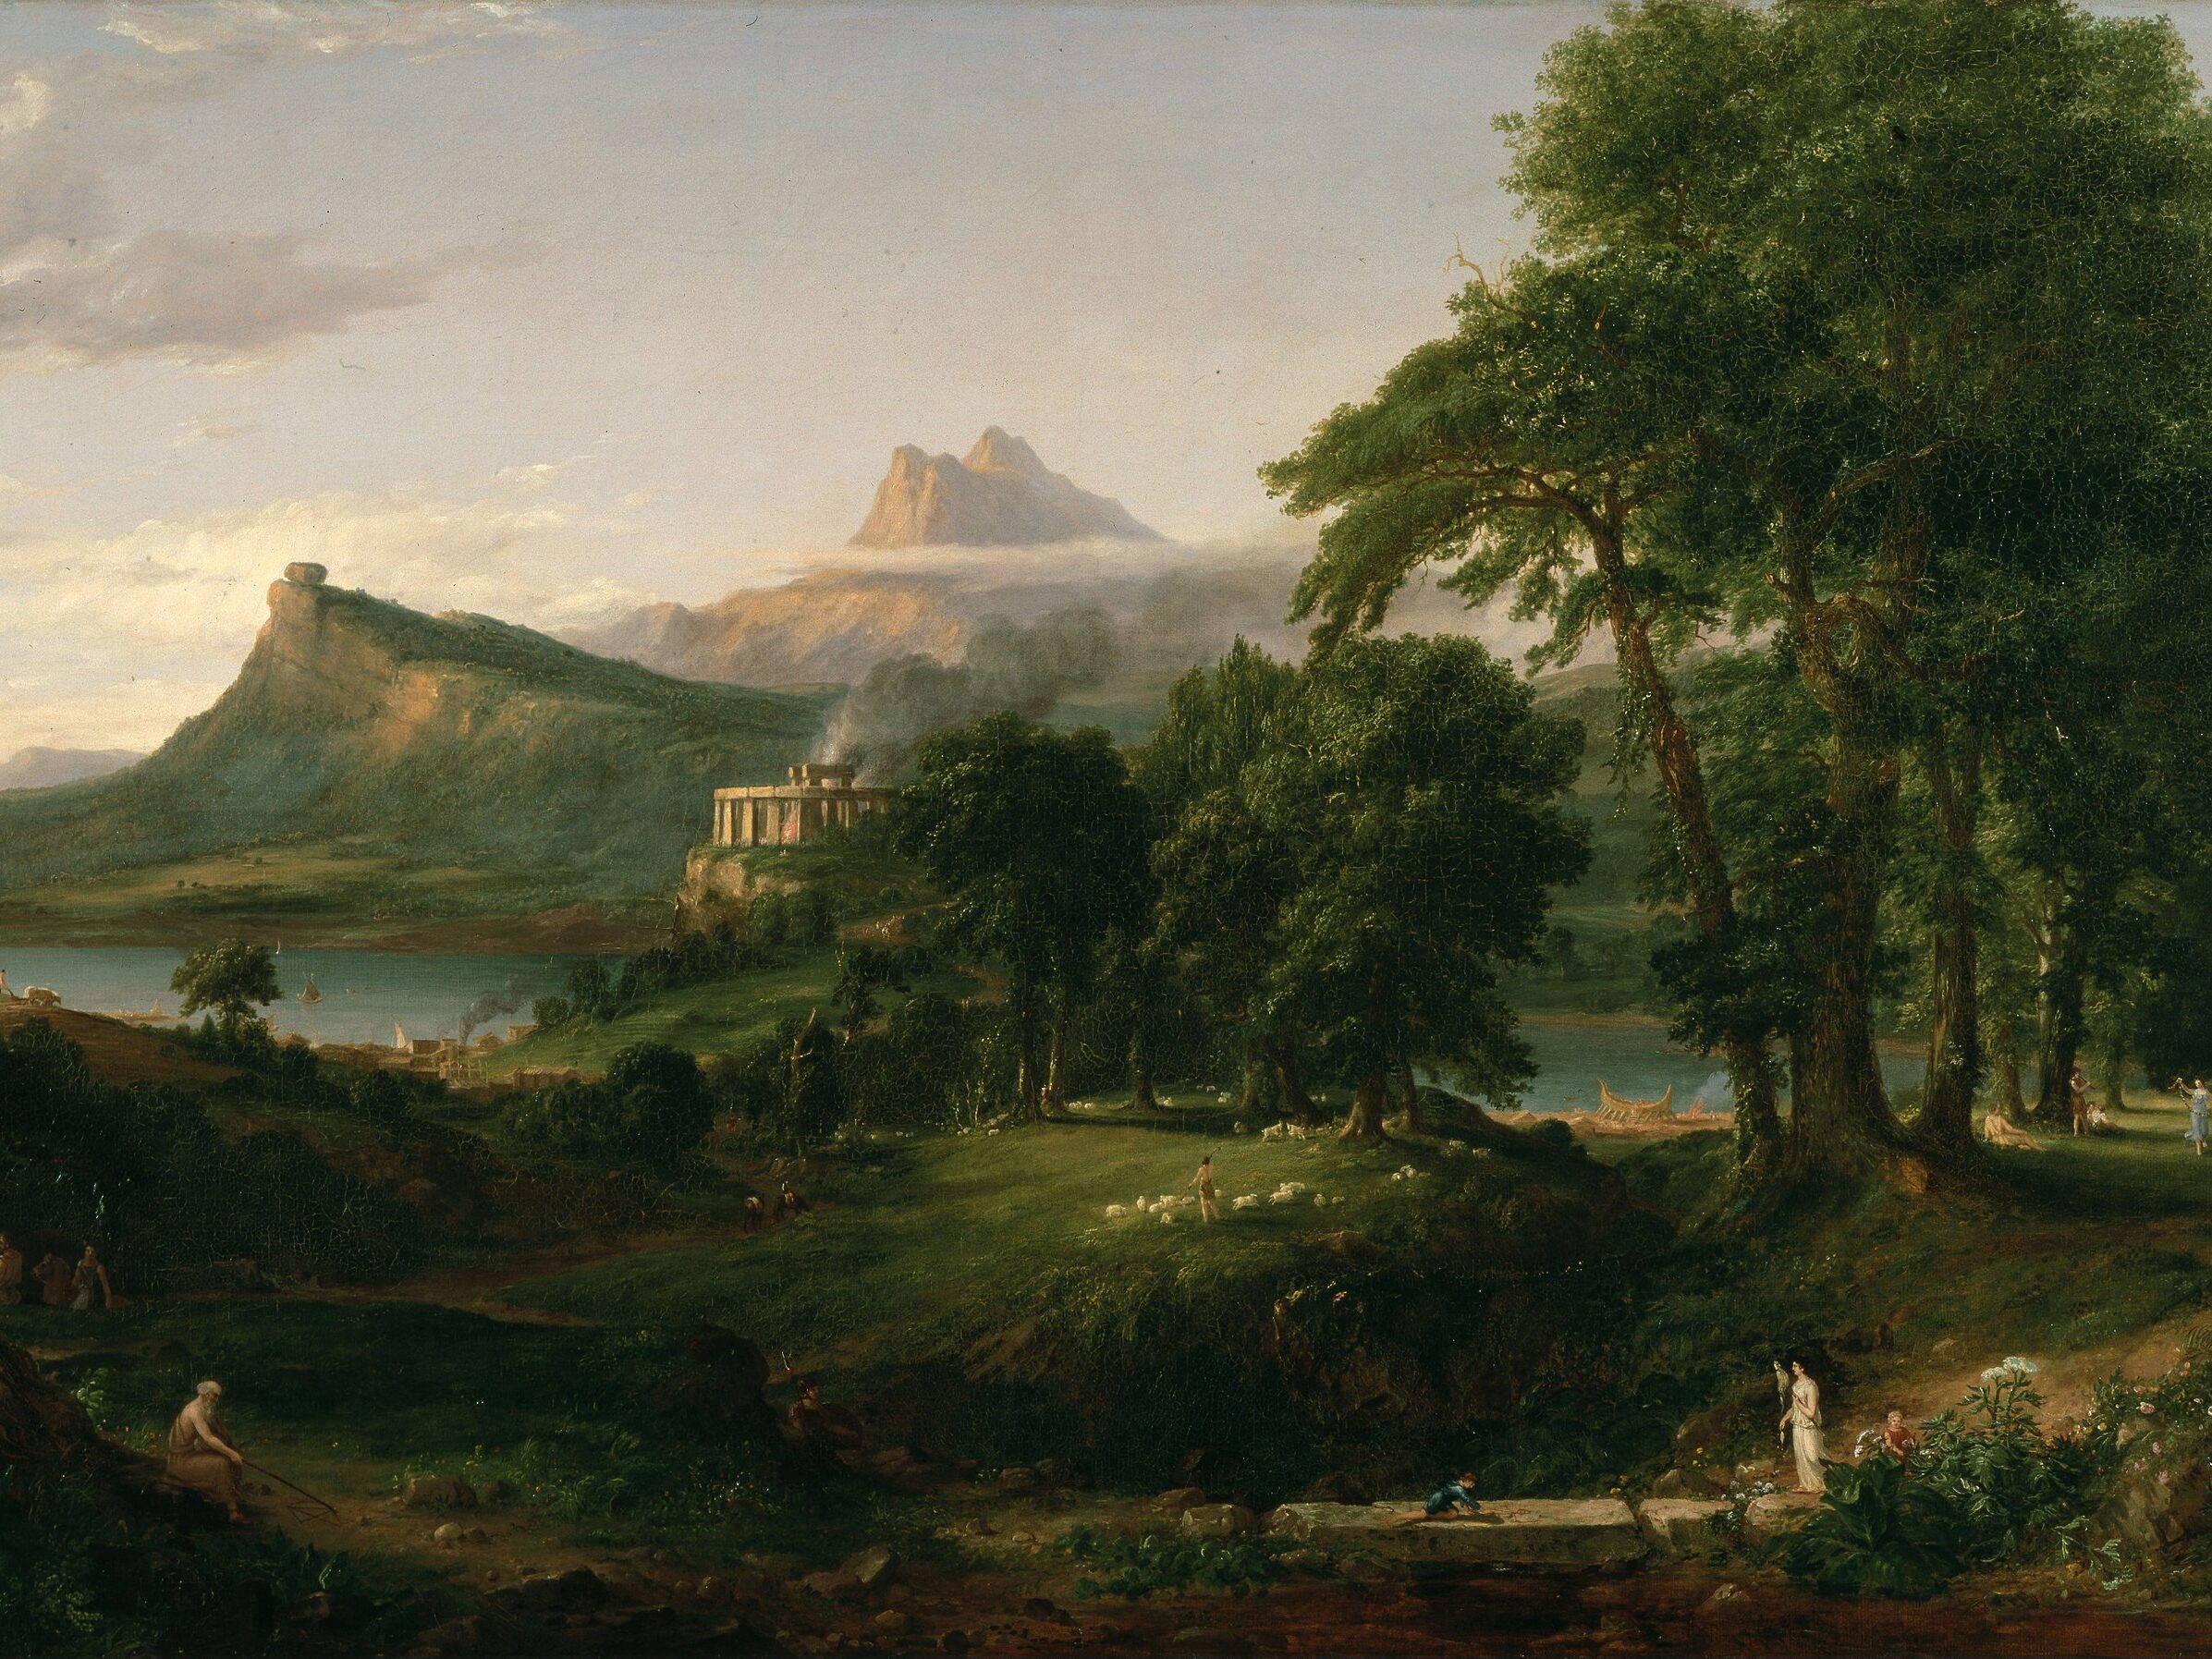 painting of a pastoral landscape